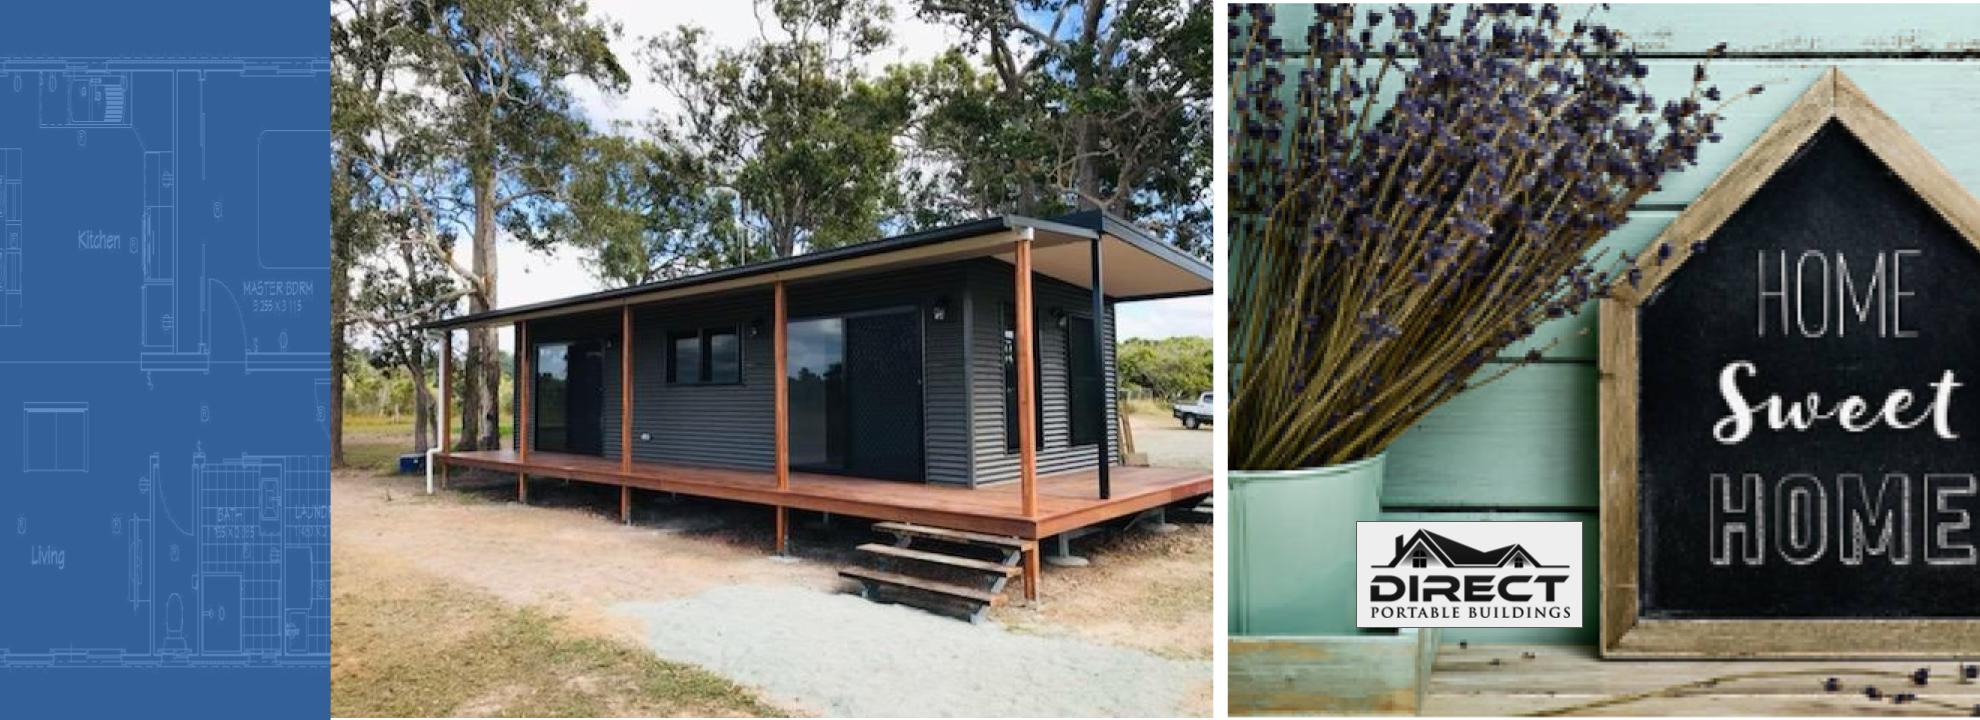 home sweet home direct portable buildings australia sunshine coast